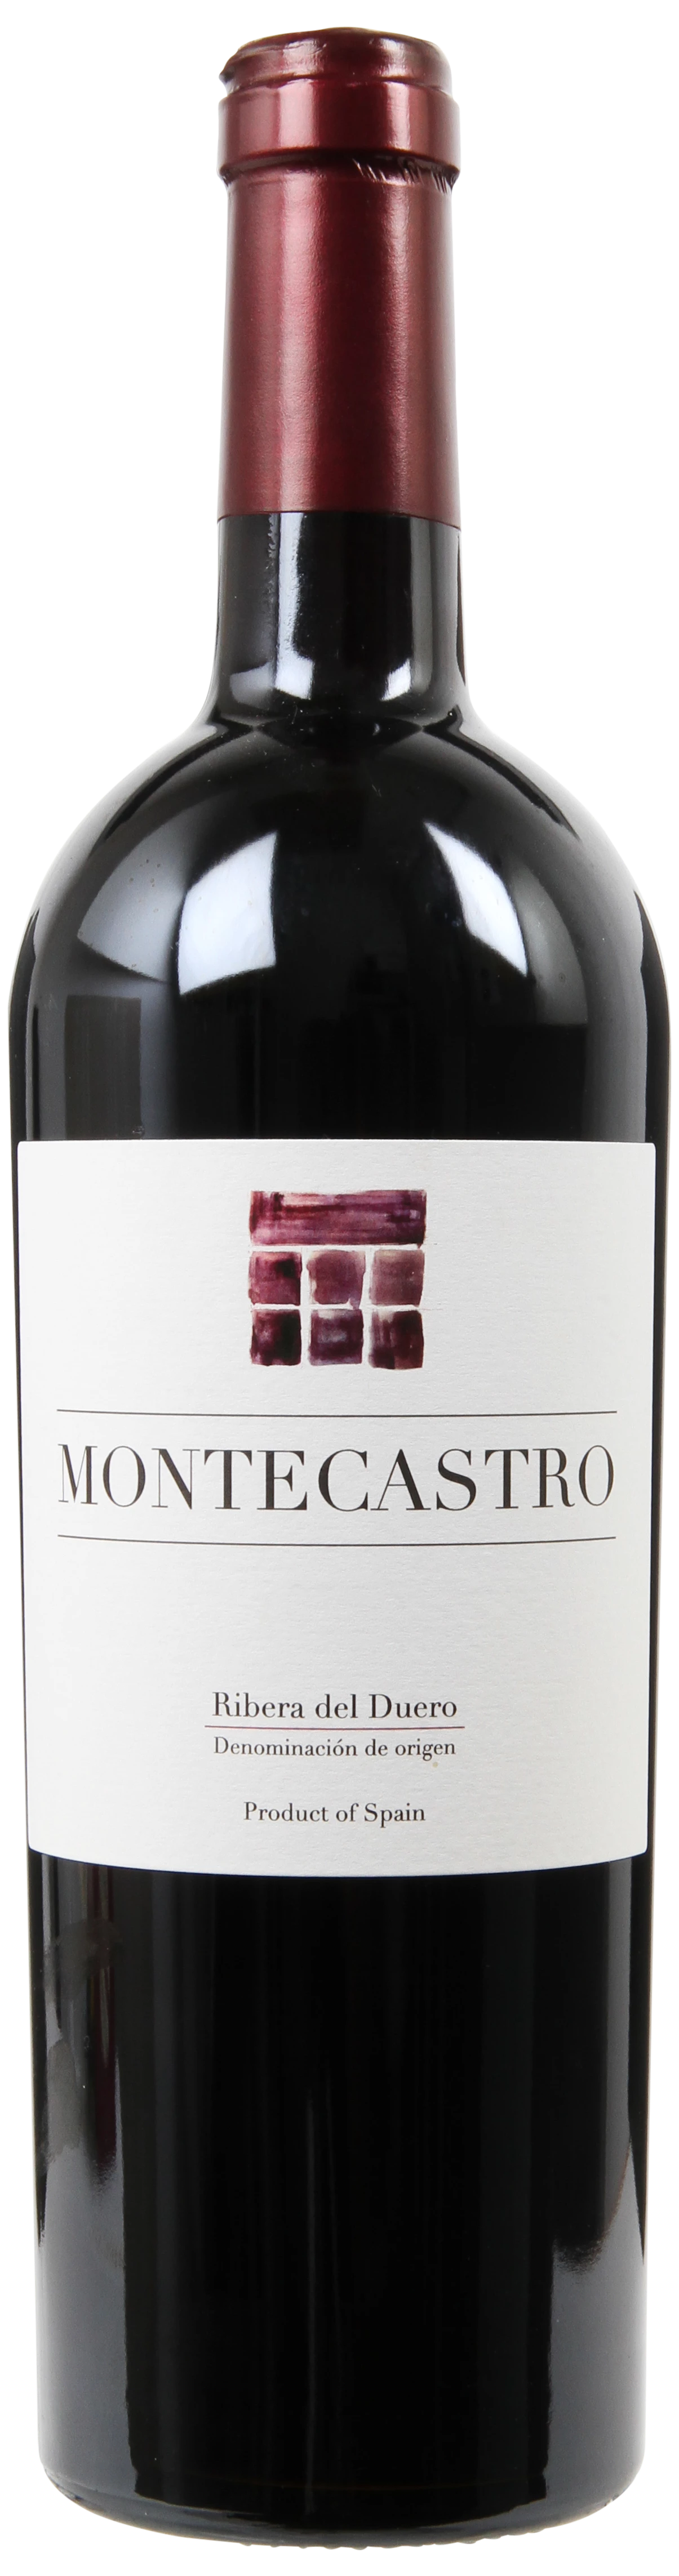 Løgismose Rødvin Montecastro Ribera Del Duero 2019 ny etikette -  221314